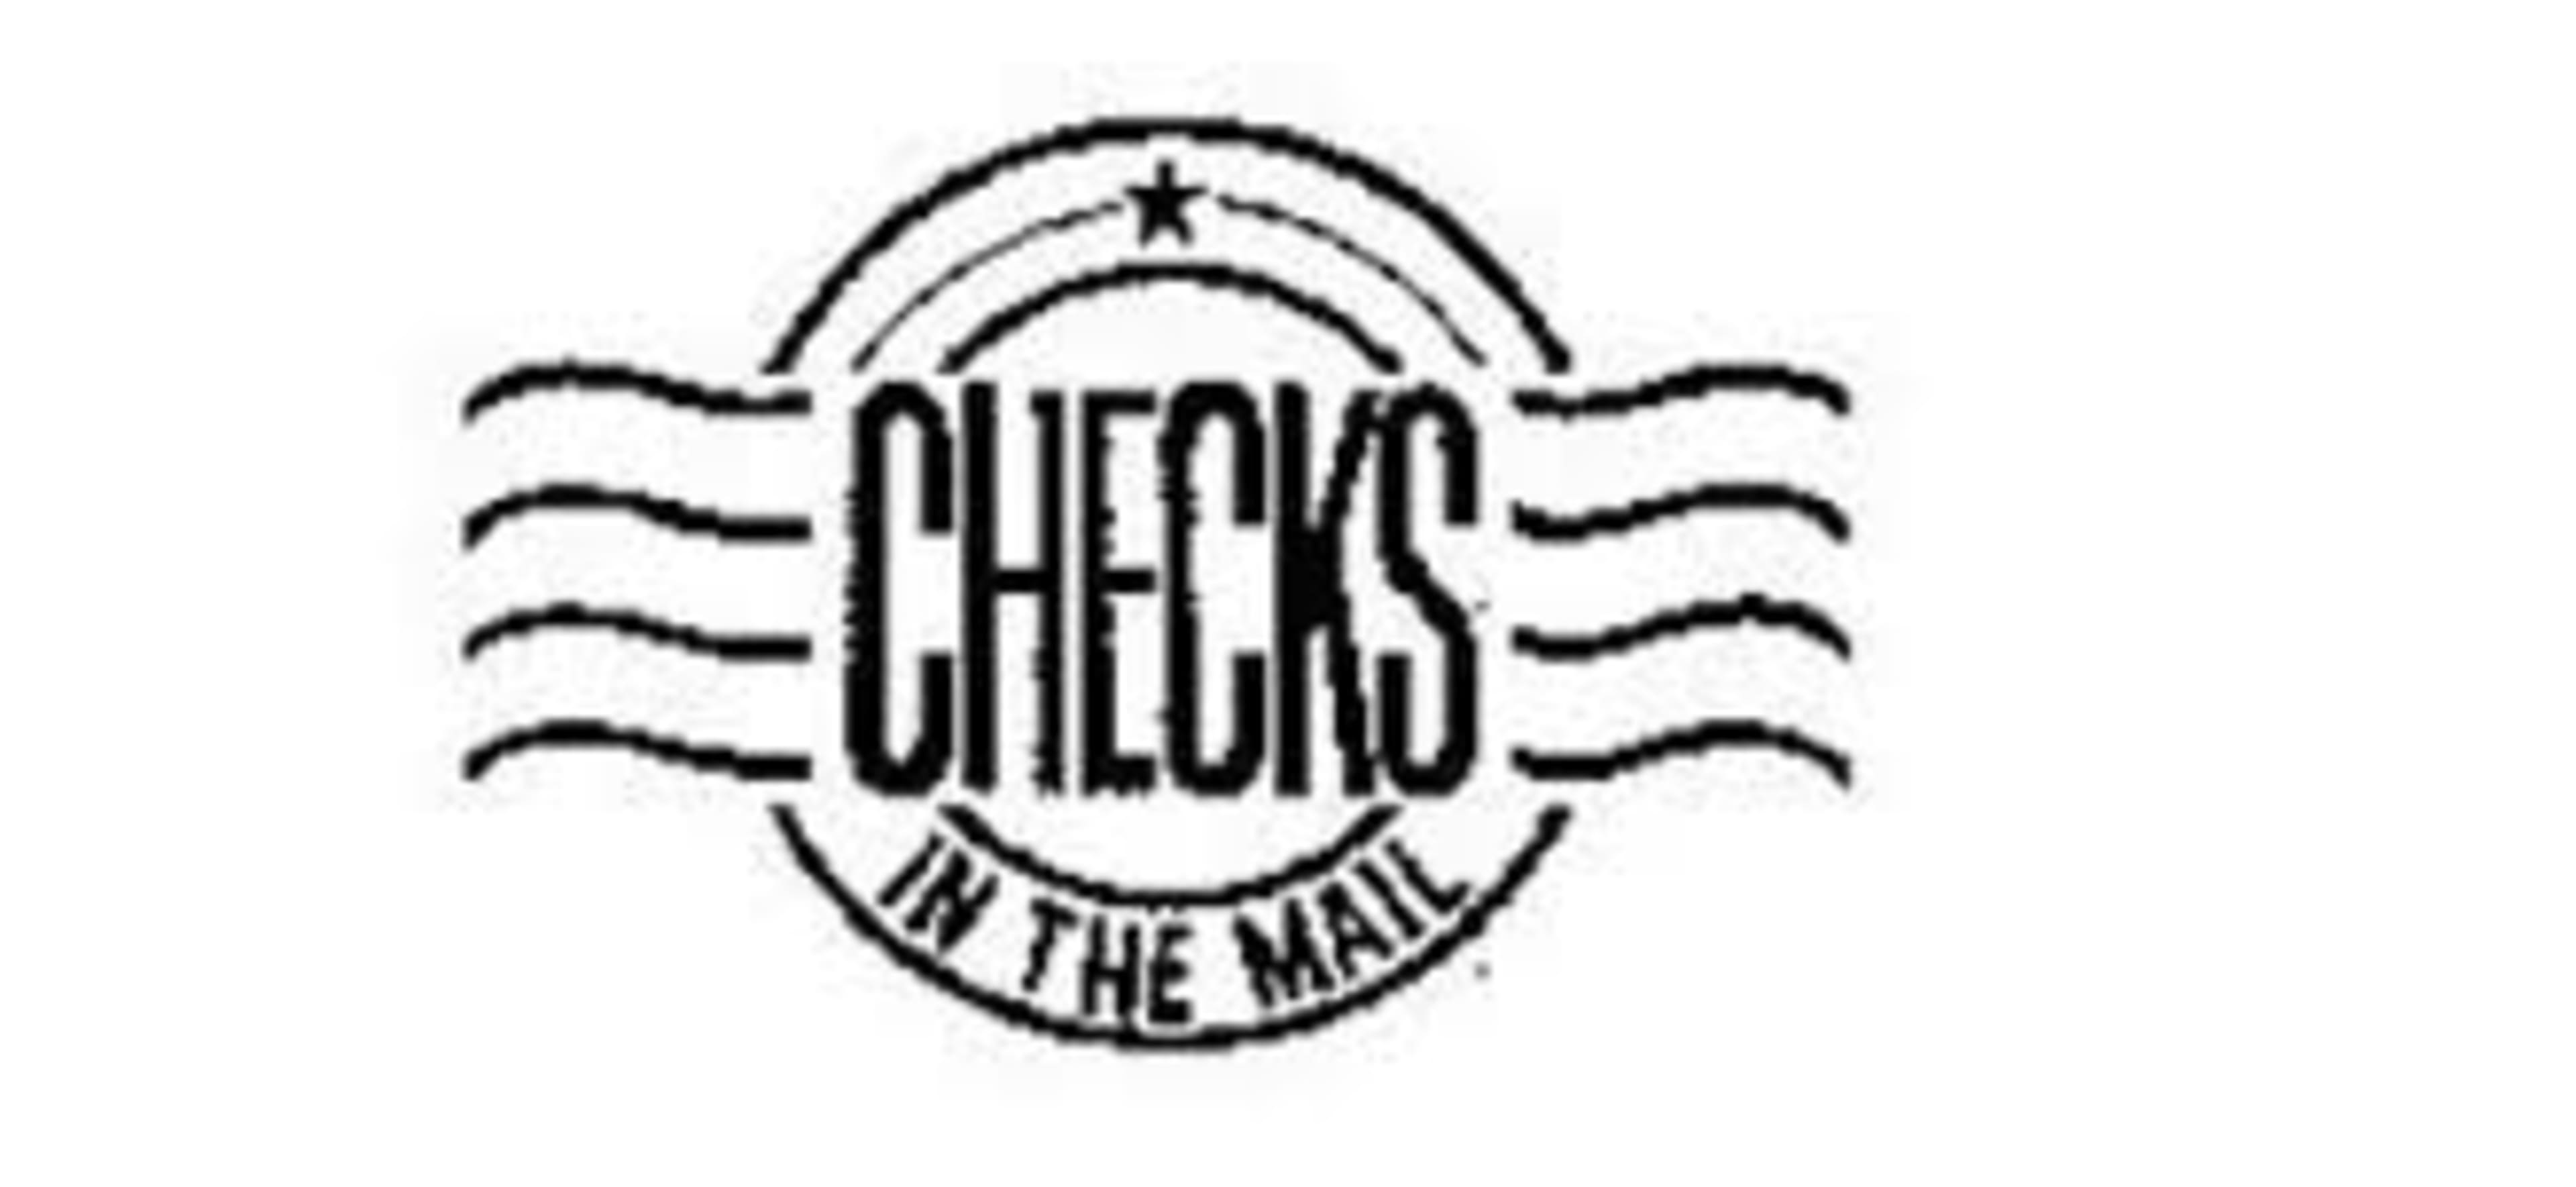 Checks In The MailCode